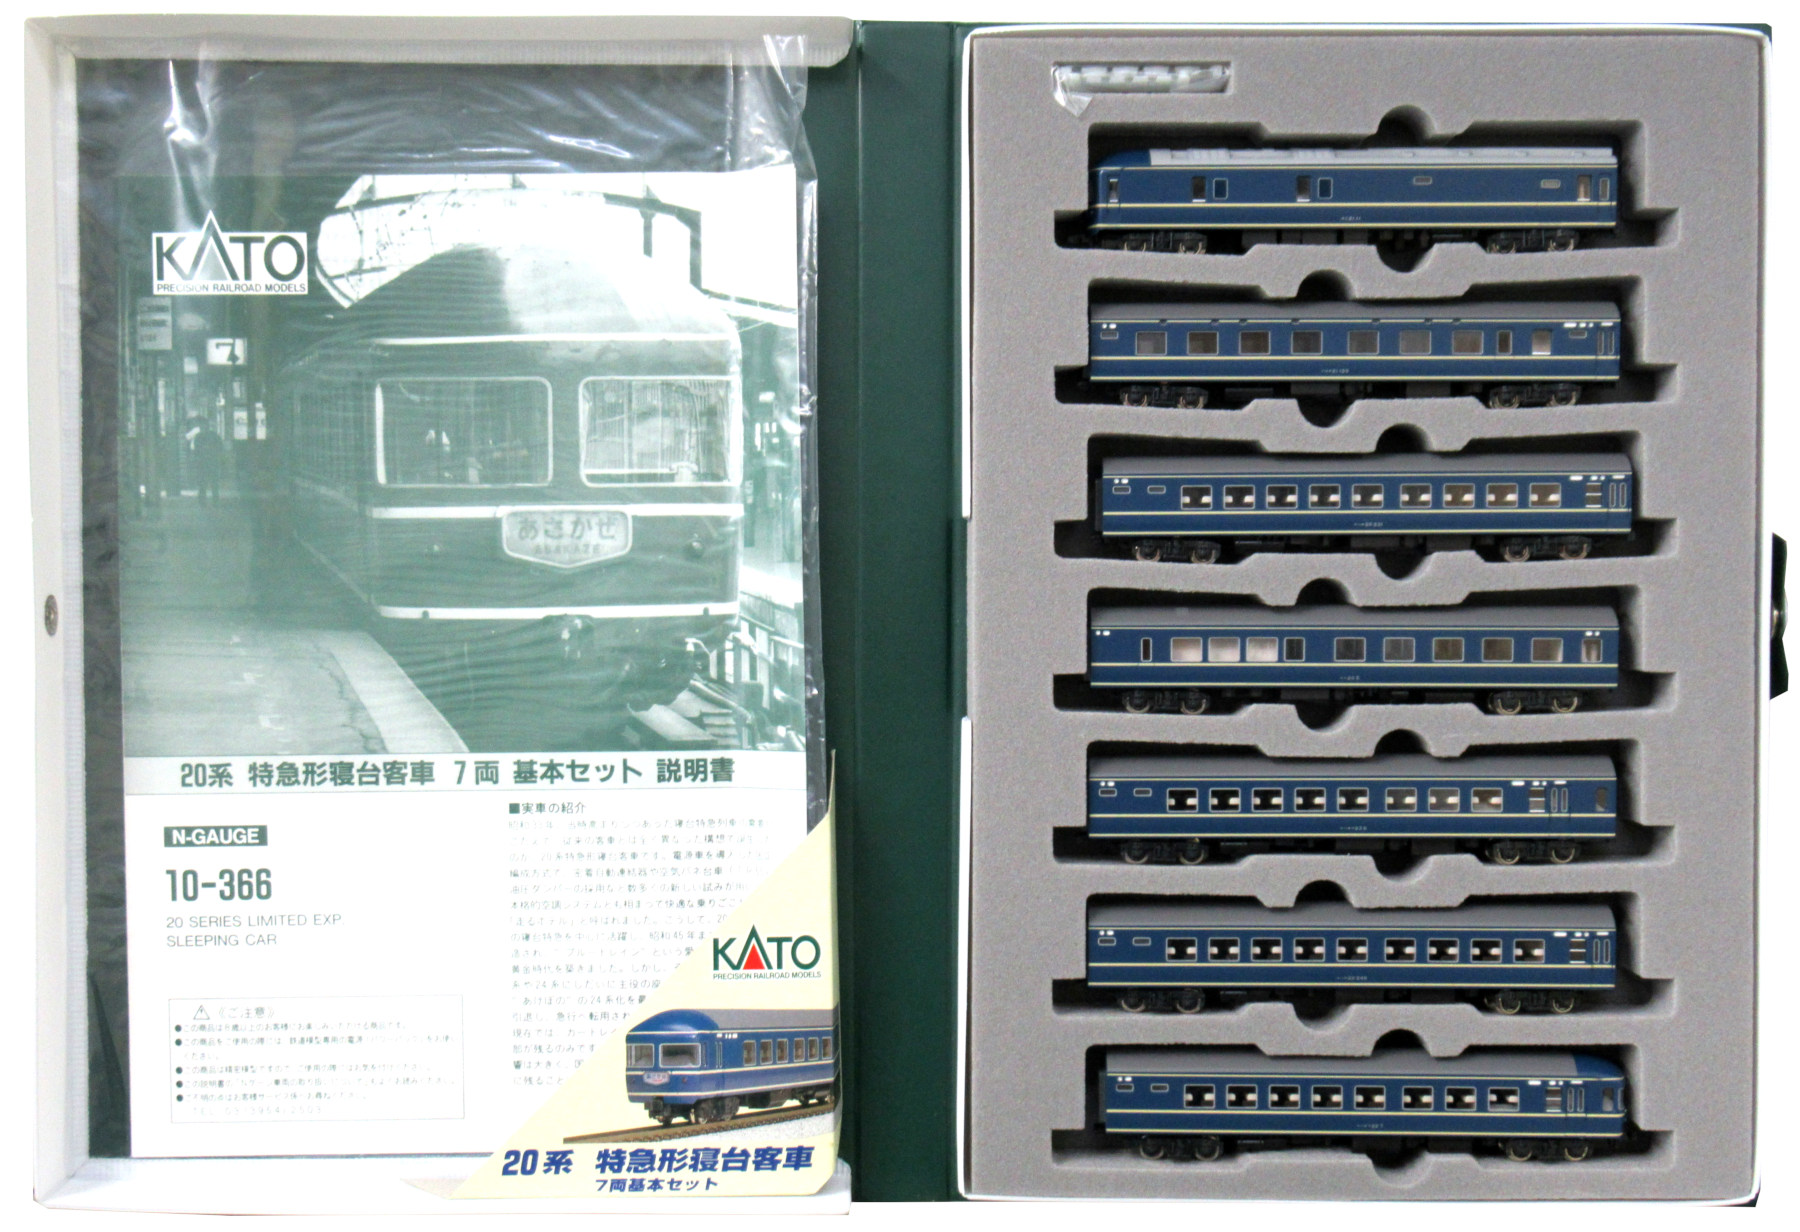 Nゲージ KATO 10-366 20系特急寝台客車 7両基本セット - 鉄道模型